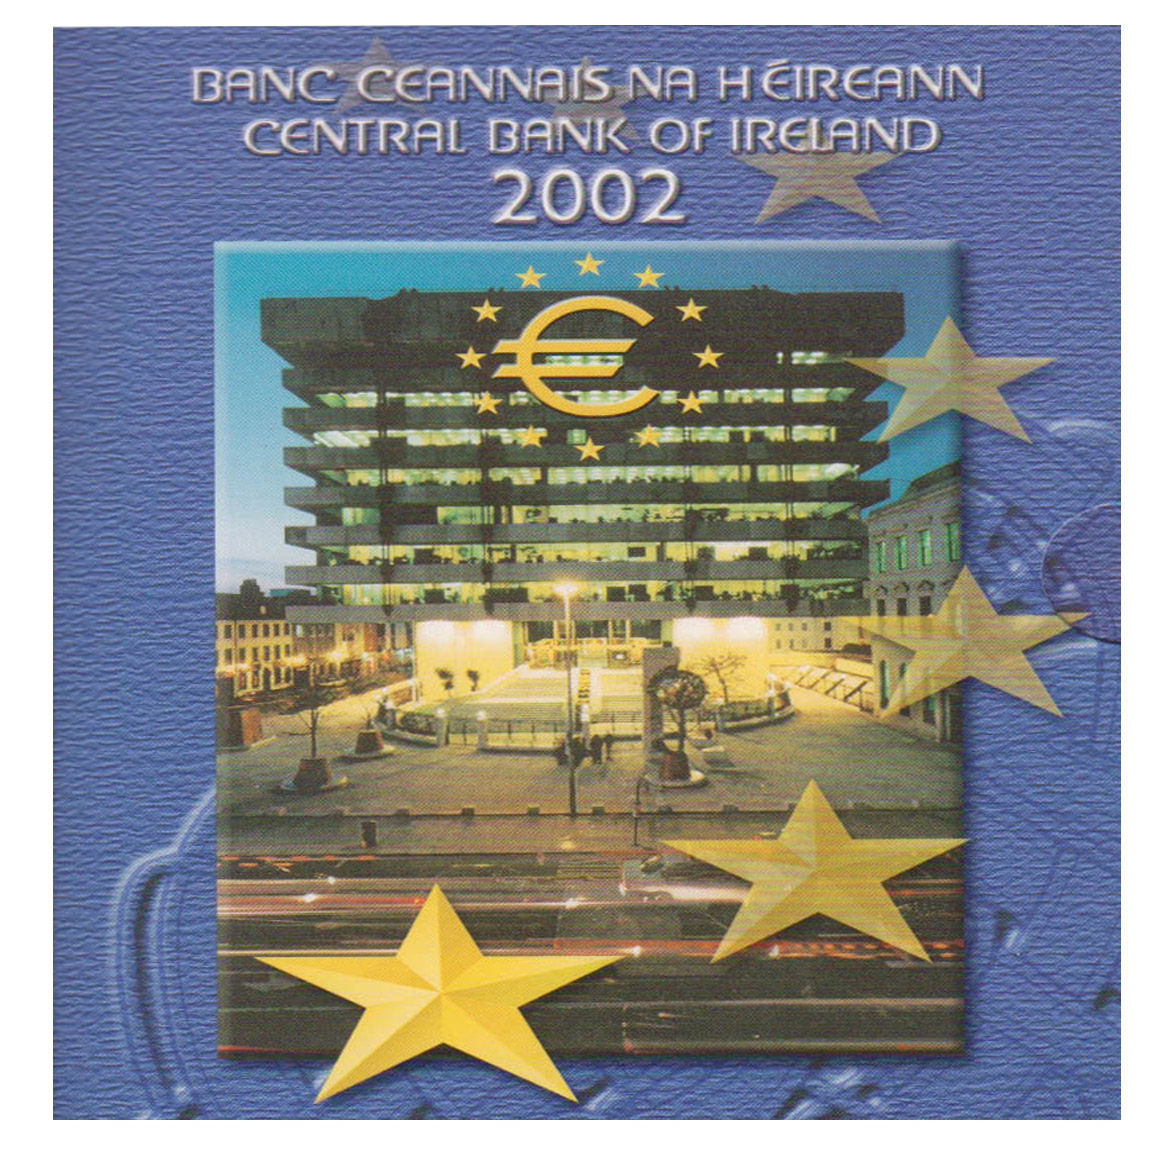  Offiz. Euo-KMS Irland *Central Bank of Irland - Euroeinführung* 2002 nur 20.000St!   